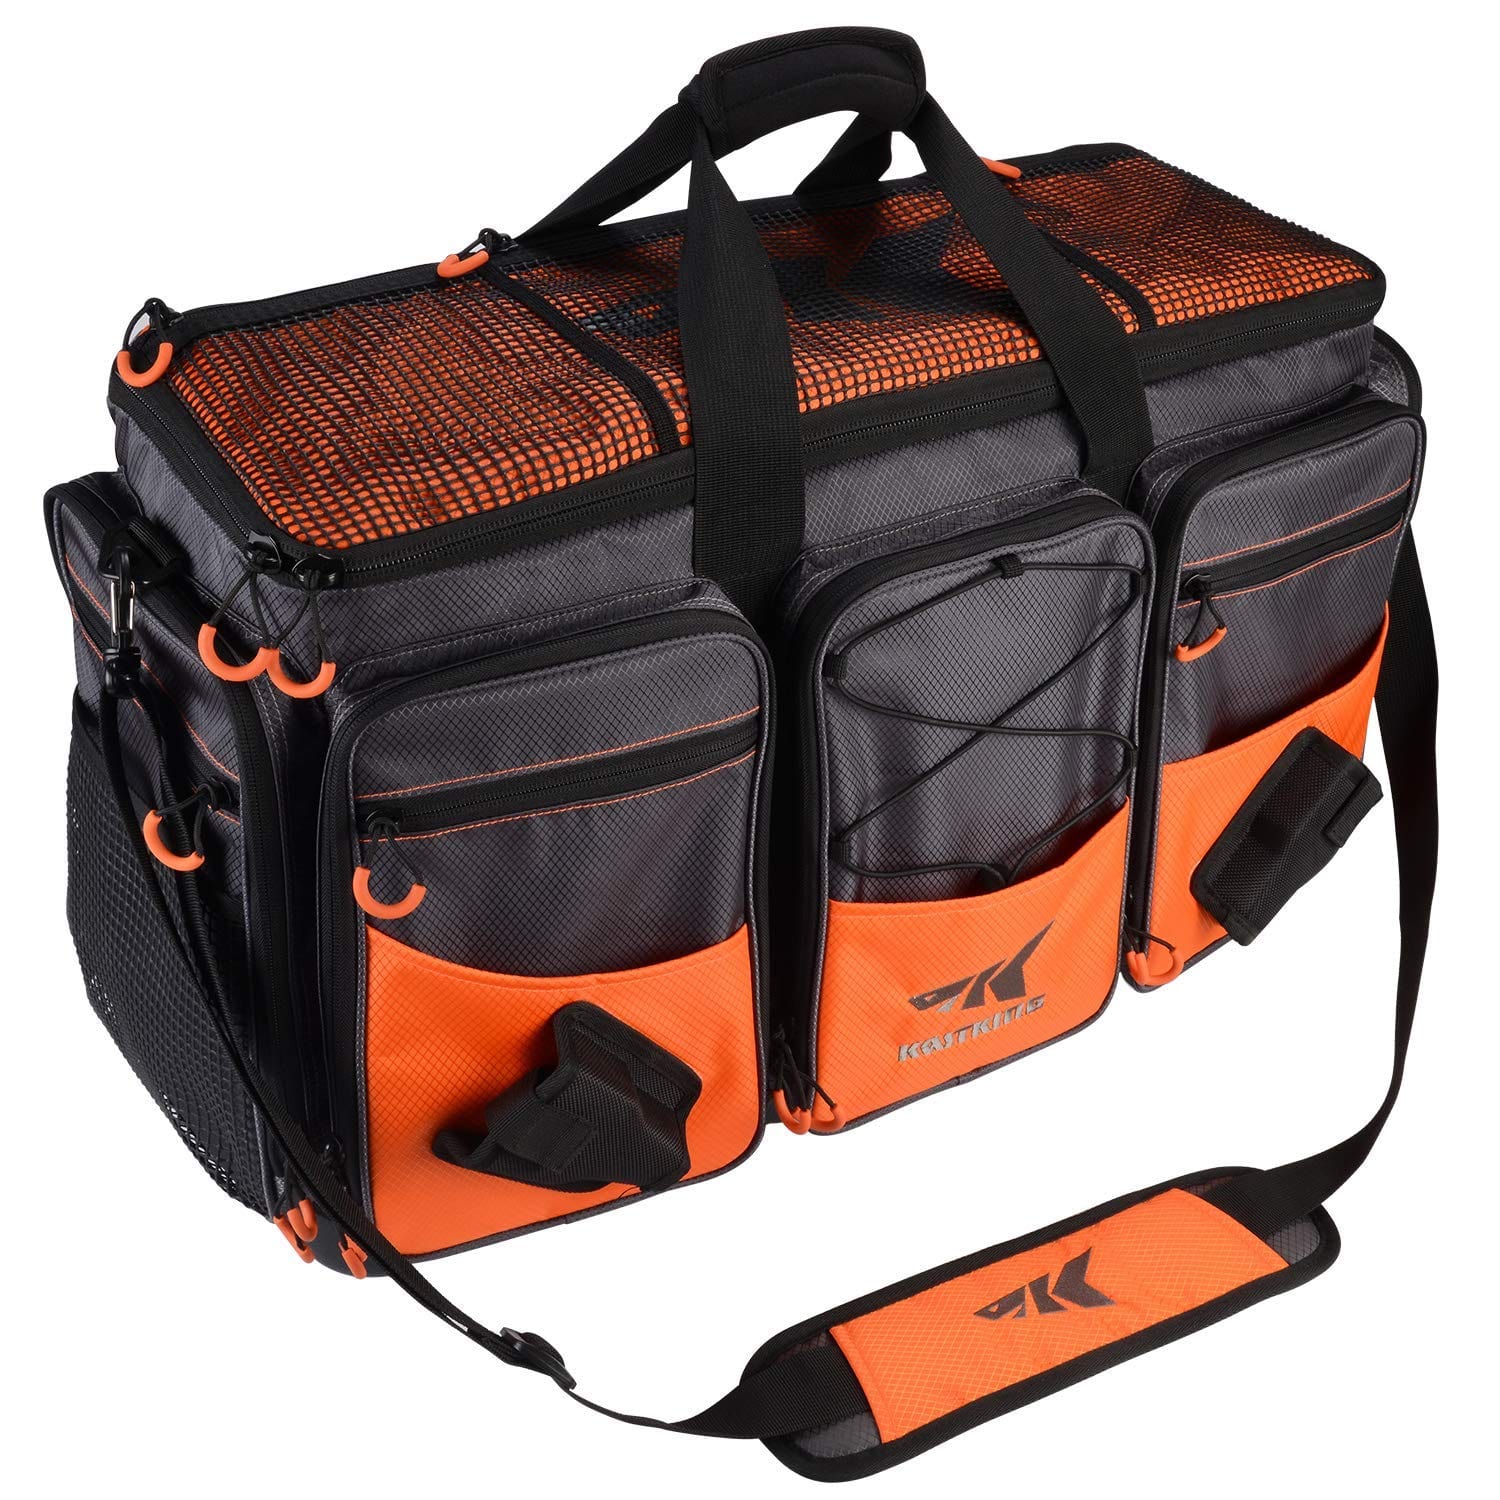 Ultrahaus Fishing Tackle Bag, Portable & Foldable Heavy-duty